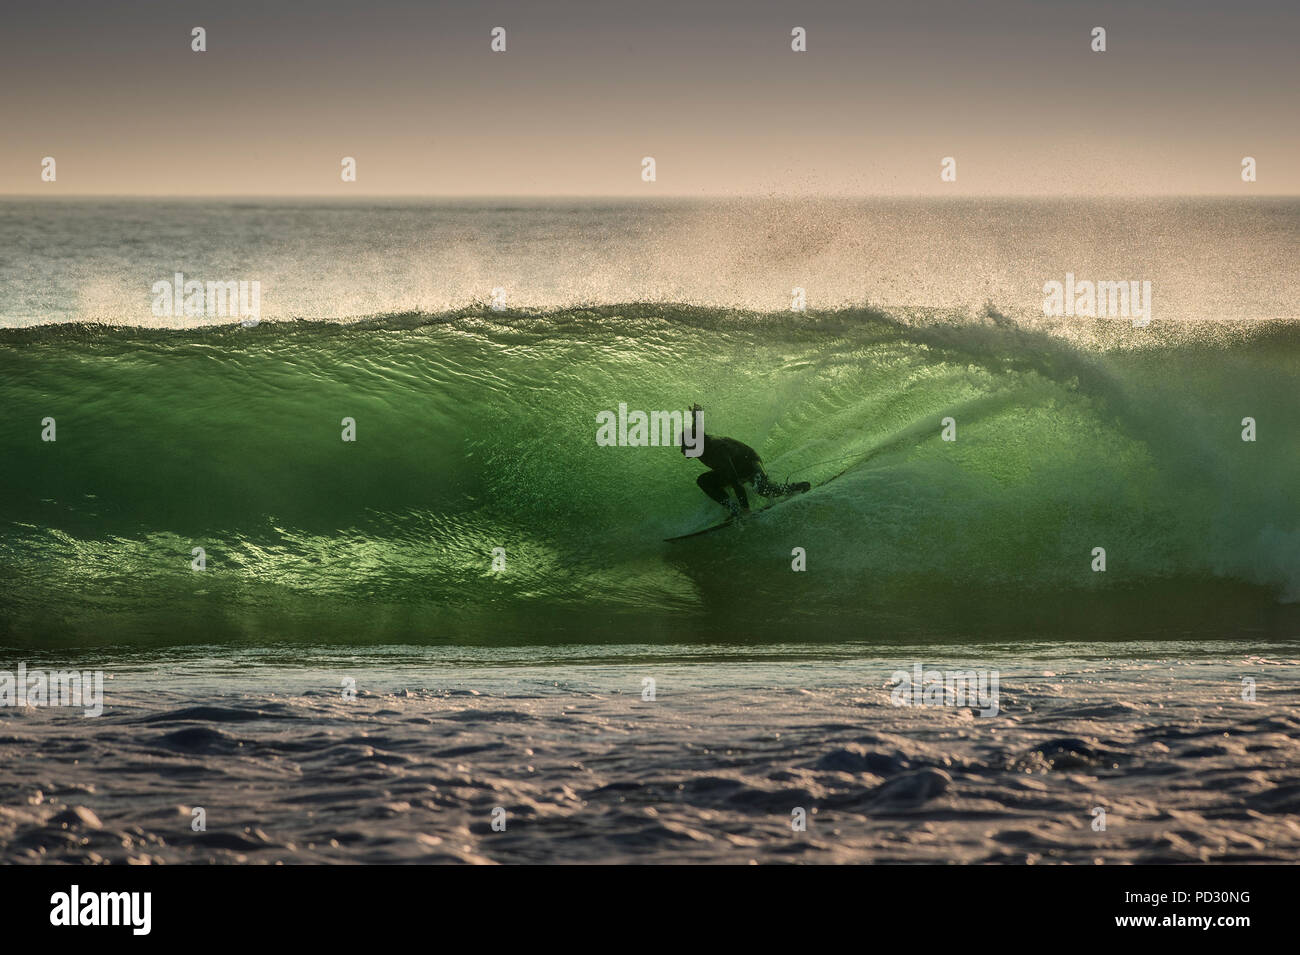 Surfer surfing on barreling wave, Crab Island, Doolin, Clare, Ireland Stock Photo